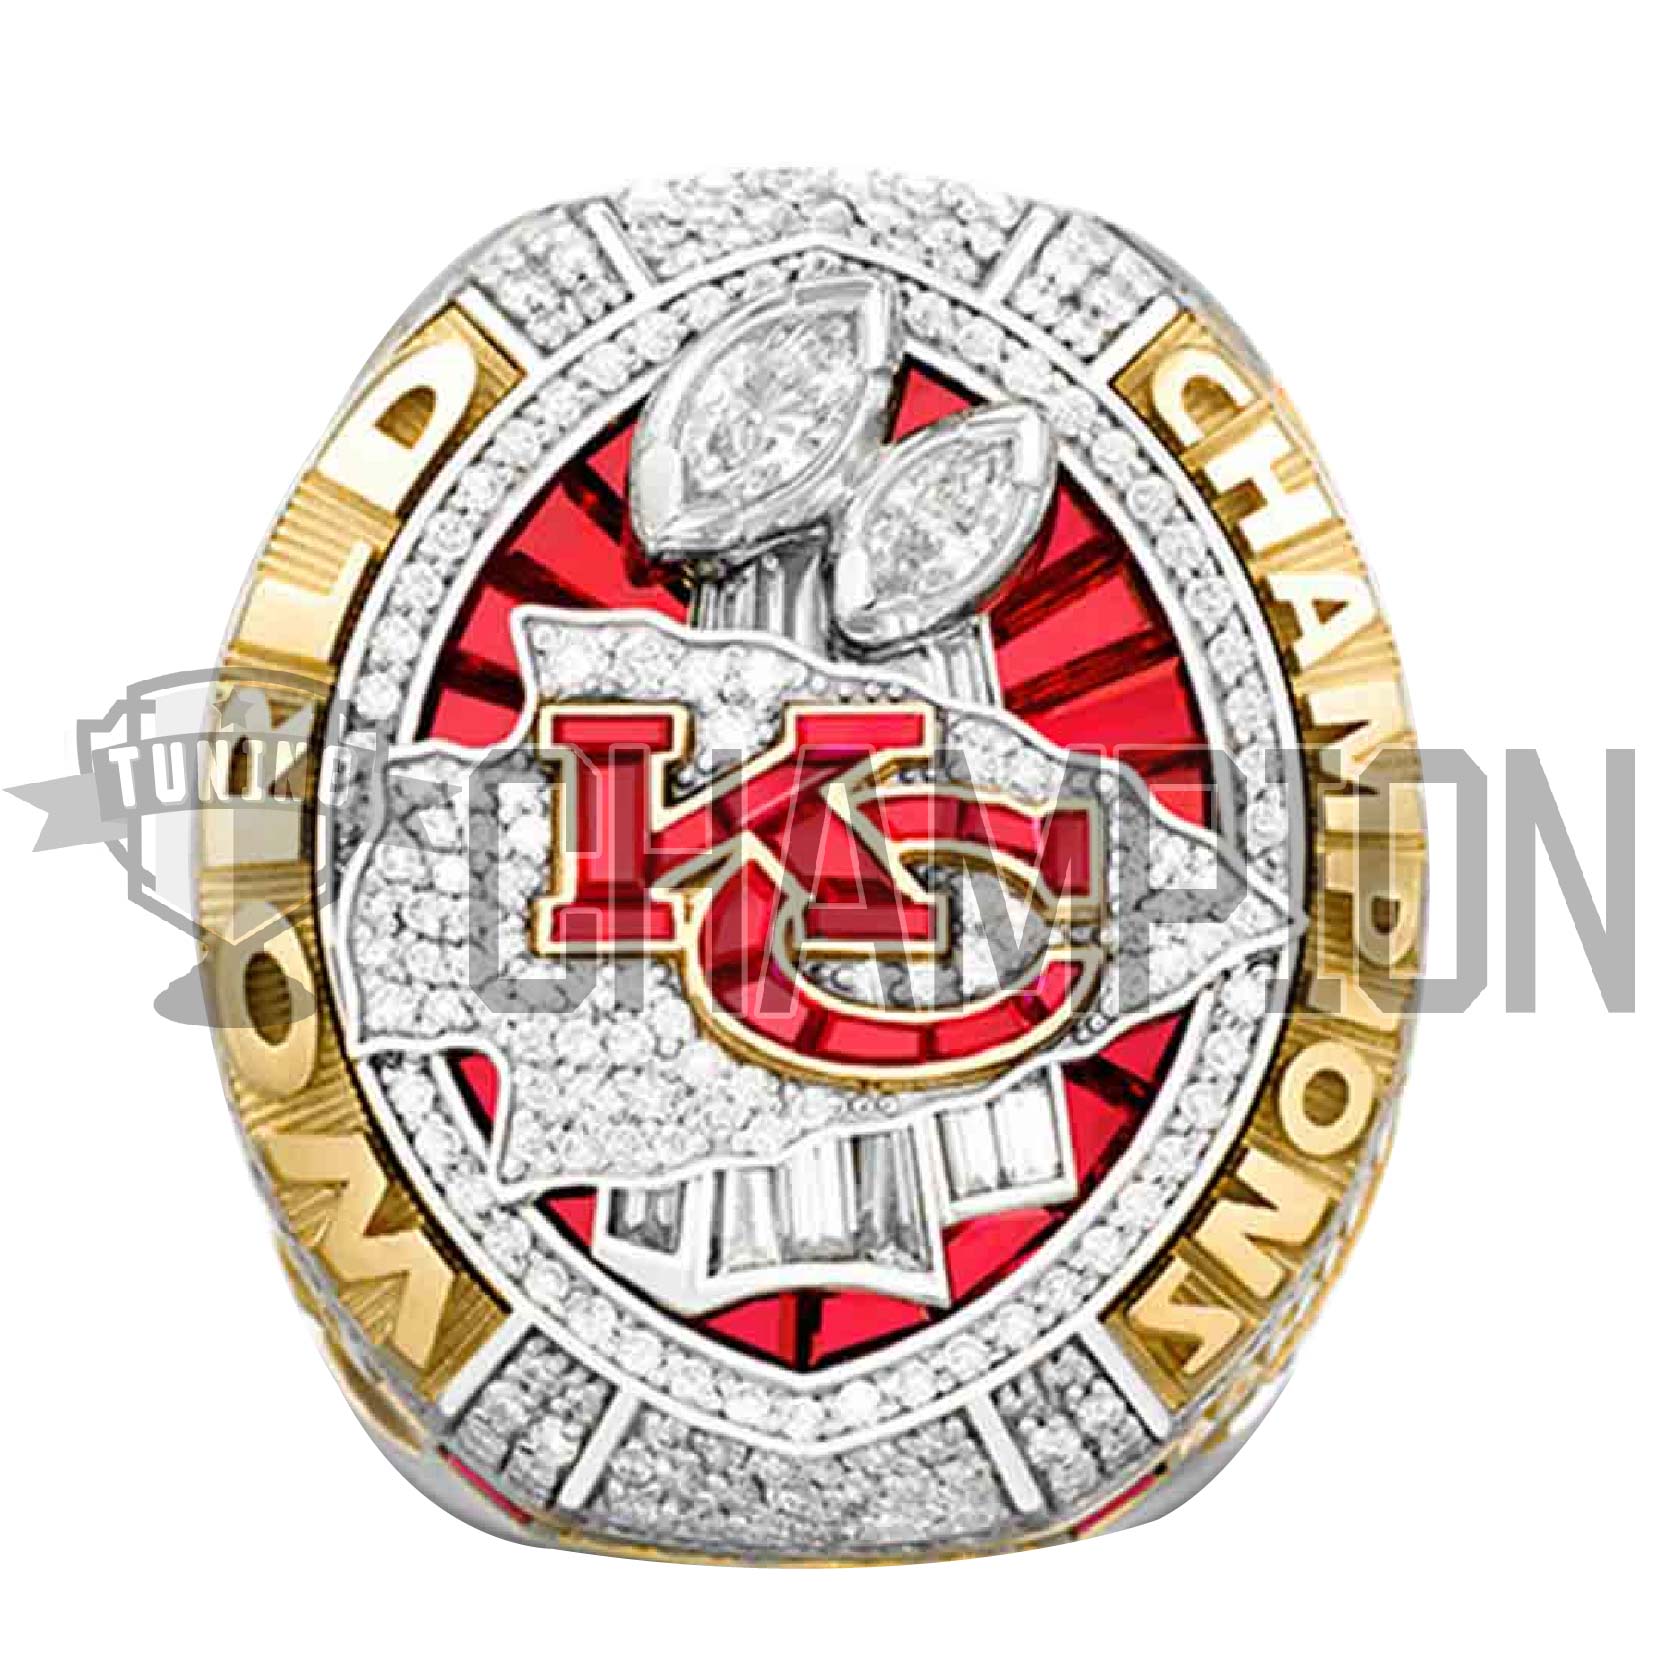 2019 Kansas City Chiefs Championship Ring Event victory ring customization